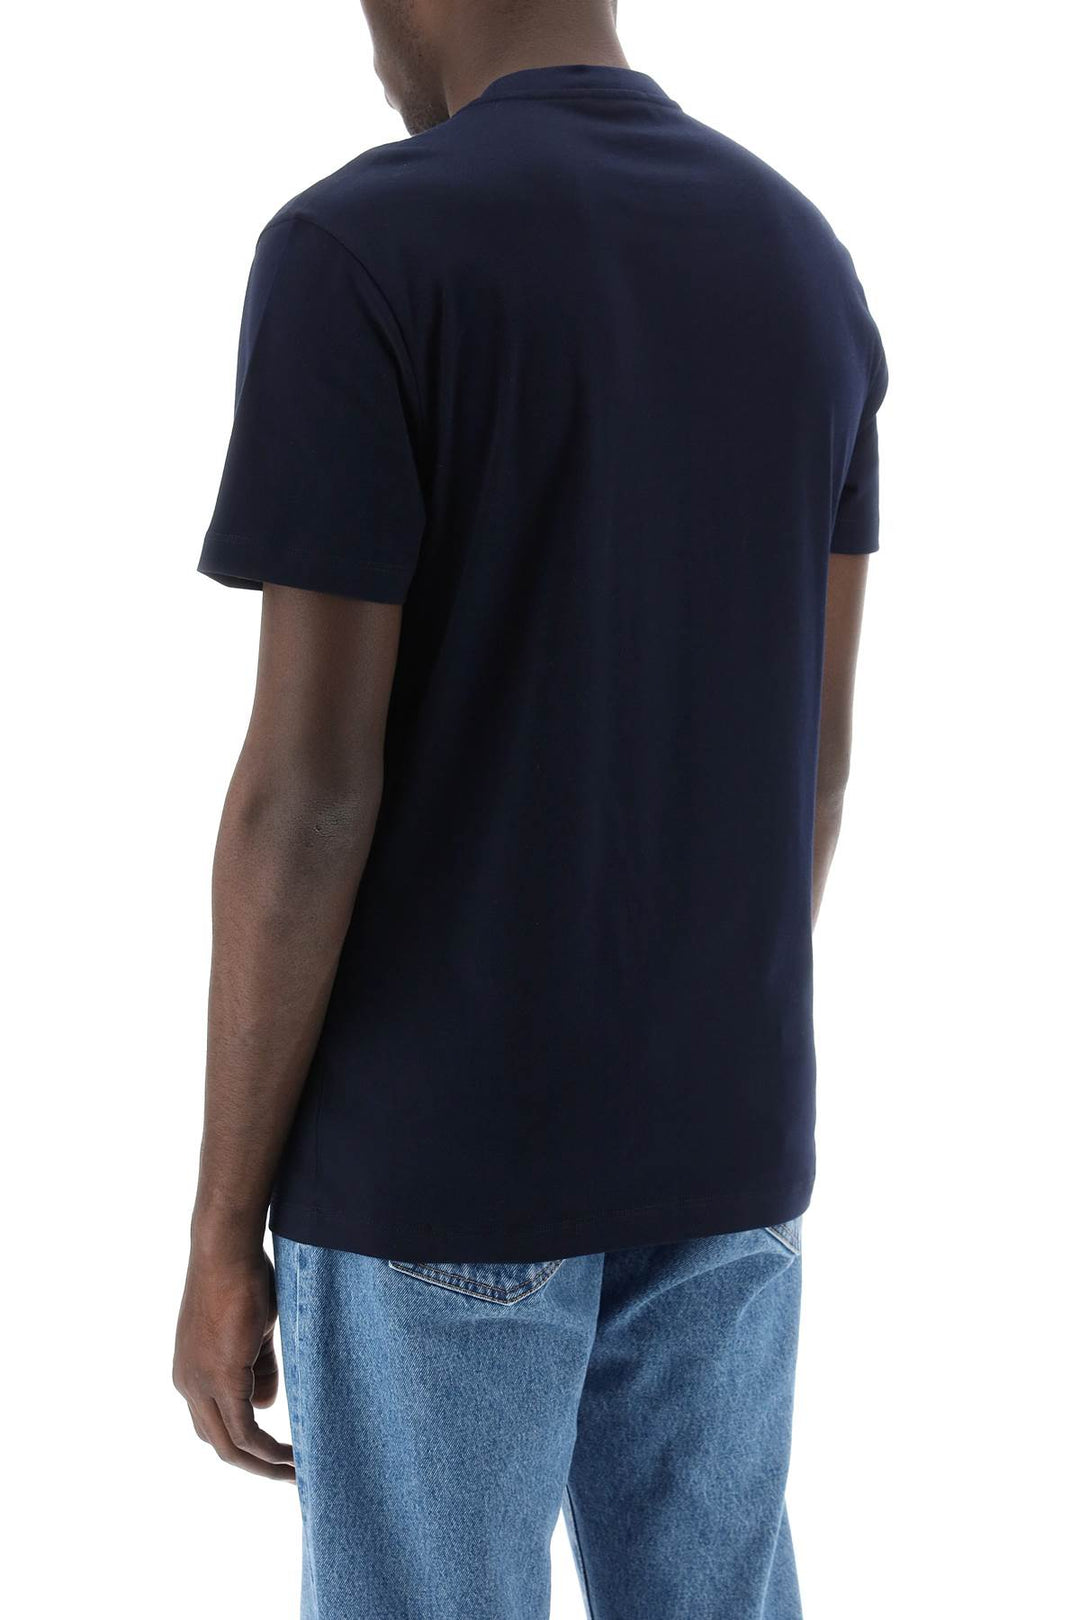 Versace Embroidered Logo T Shirt   Blu